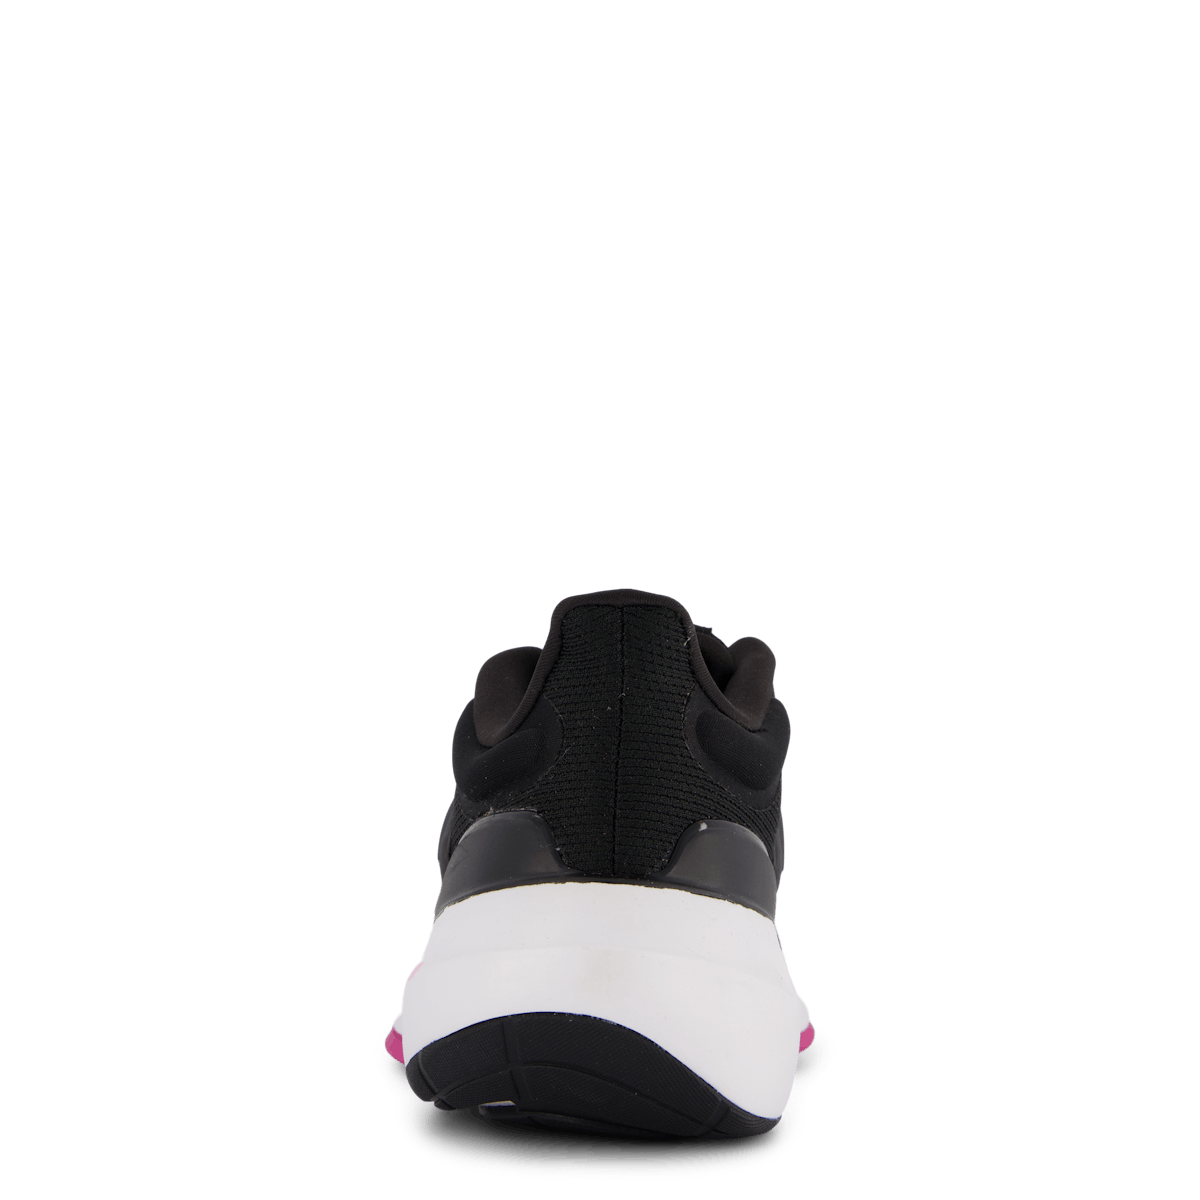 Ultrabounce Shoes Core Black / Core Black / Lucid Fuchsia